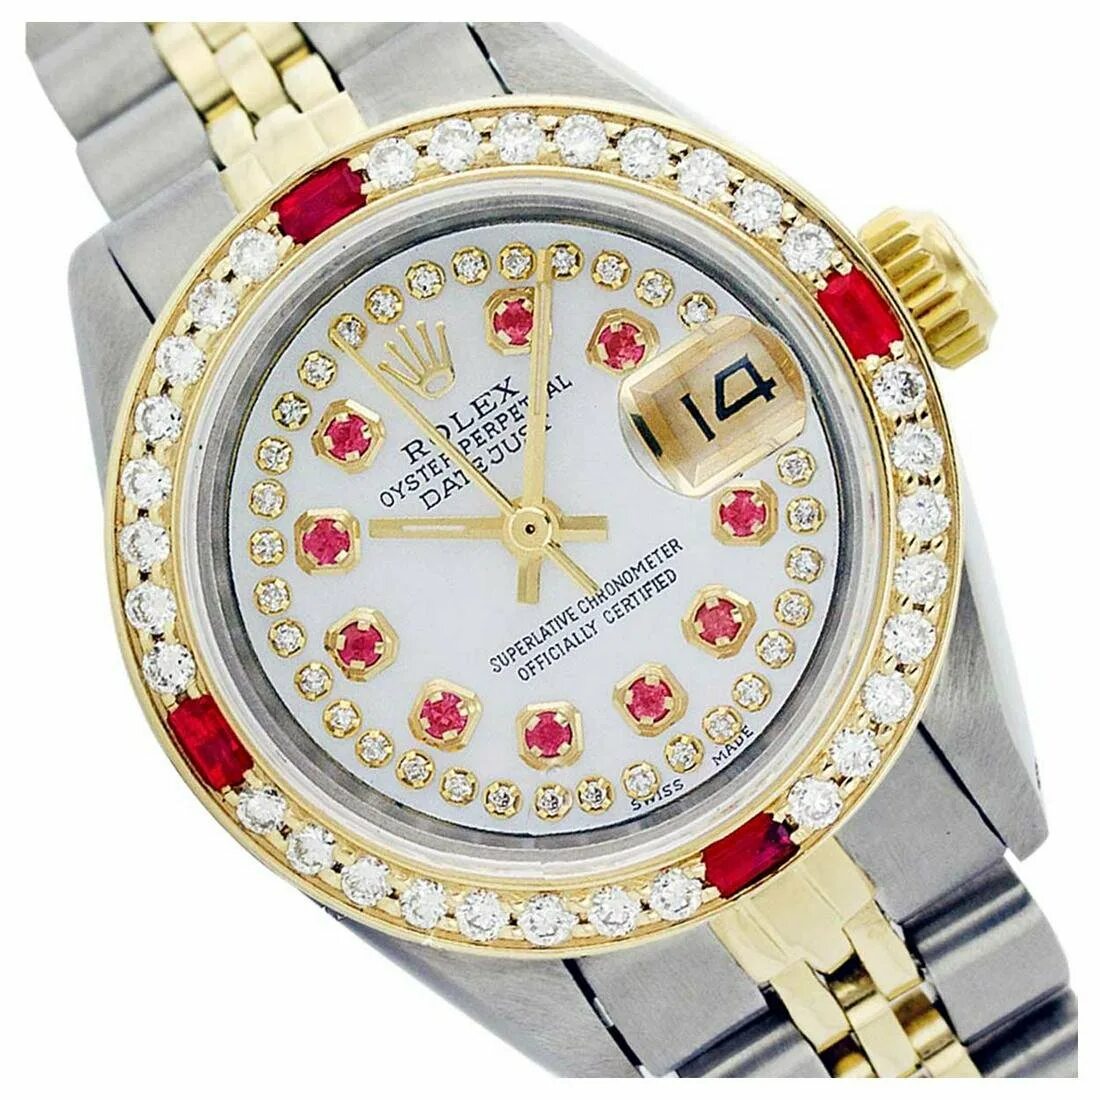 Часы Свисс Голд. Часы Saval Swiss Gold. Женские часы с бриллиантами на циферблате. Rolex Lady Diamond.